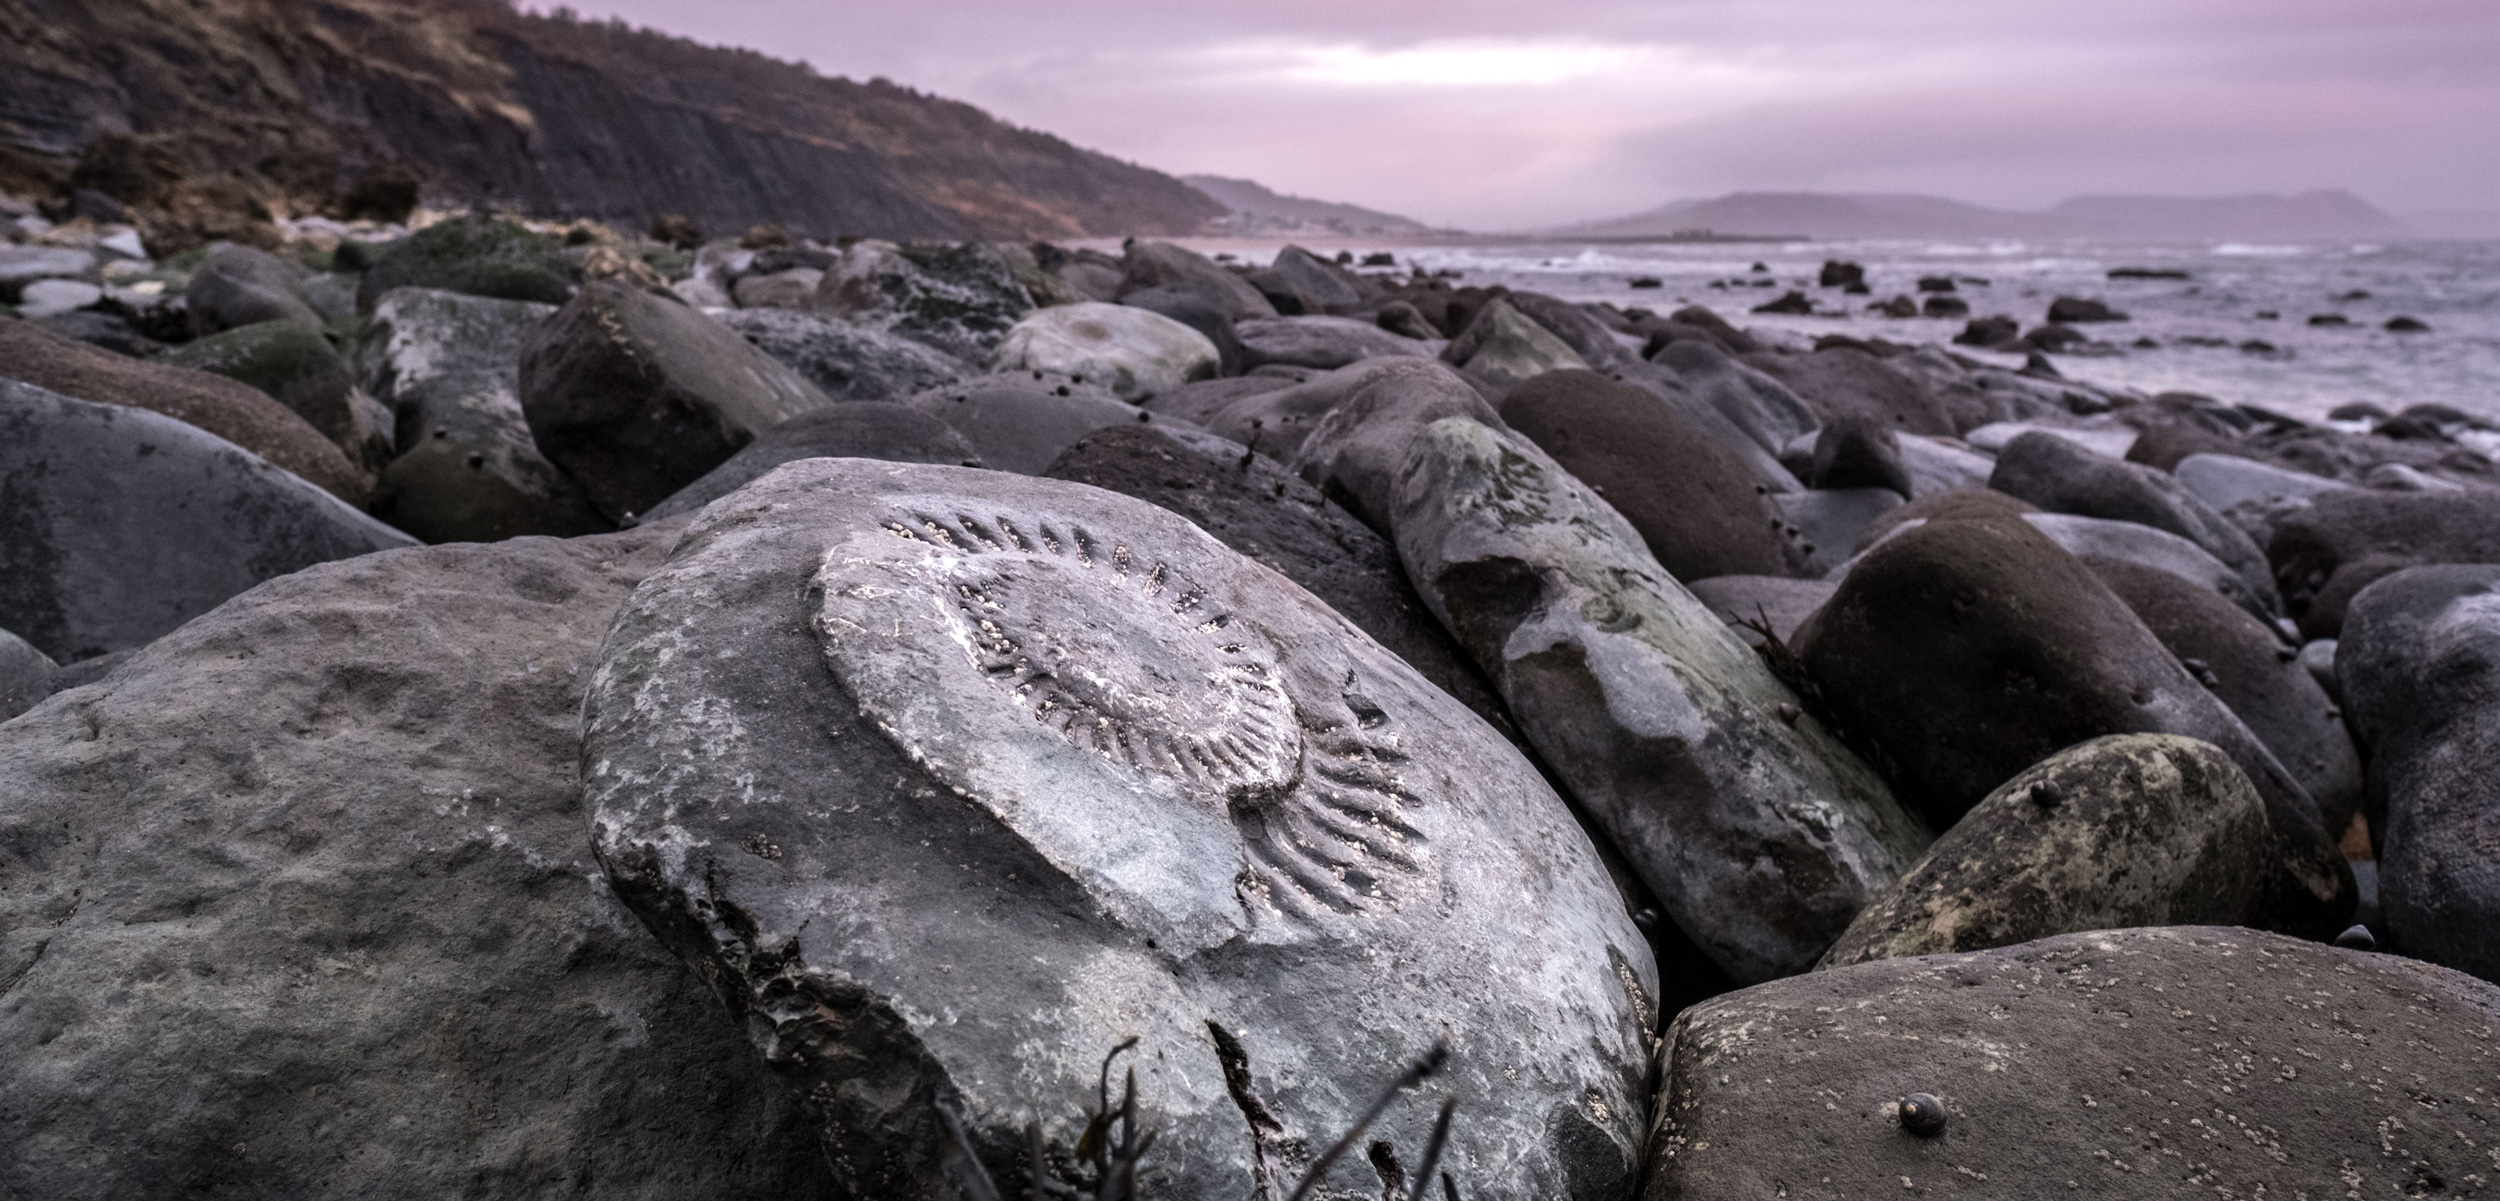 ammonite fossil on beach